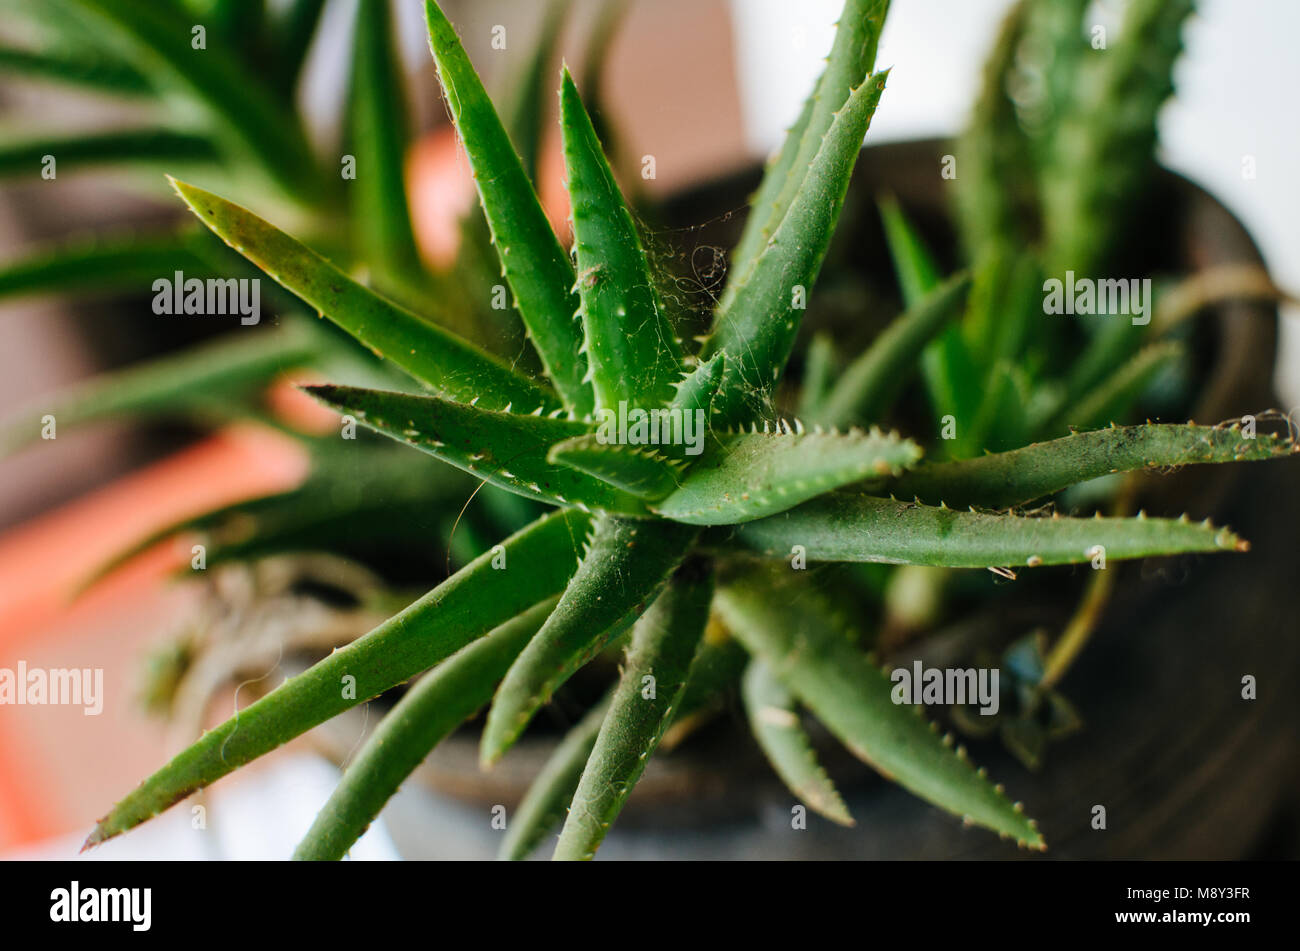 Leafy green sabila plant in the garden Stock Photo - Alamy